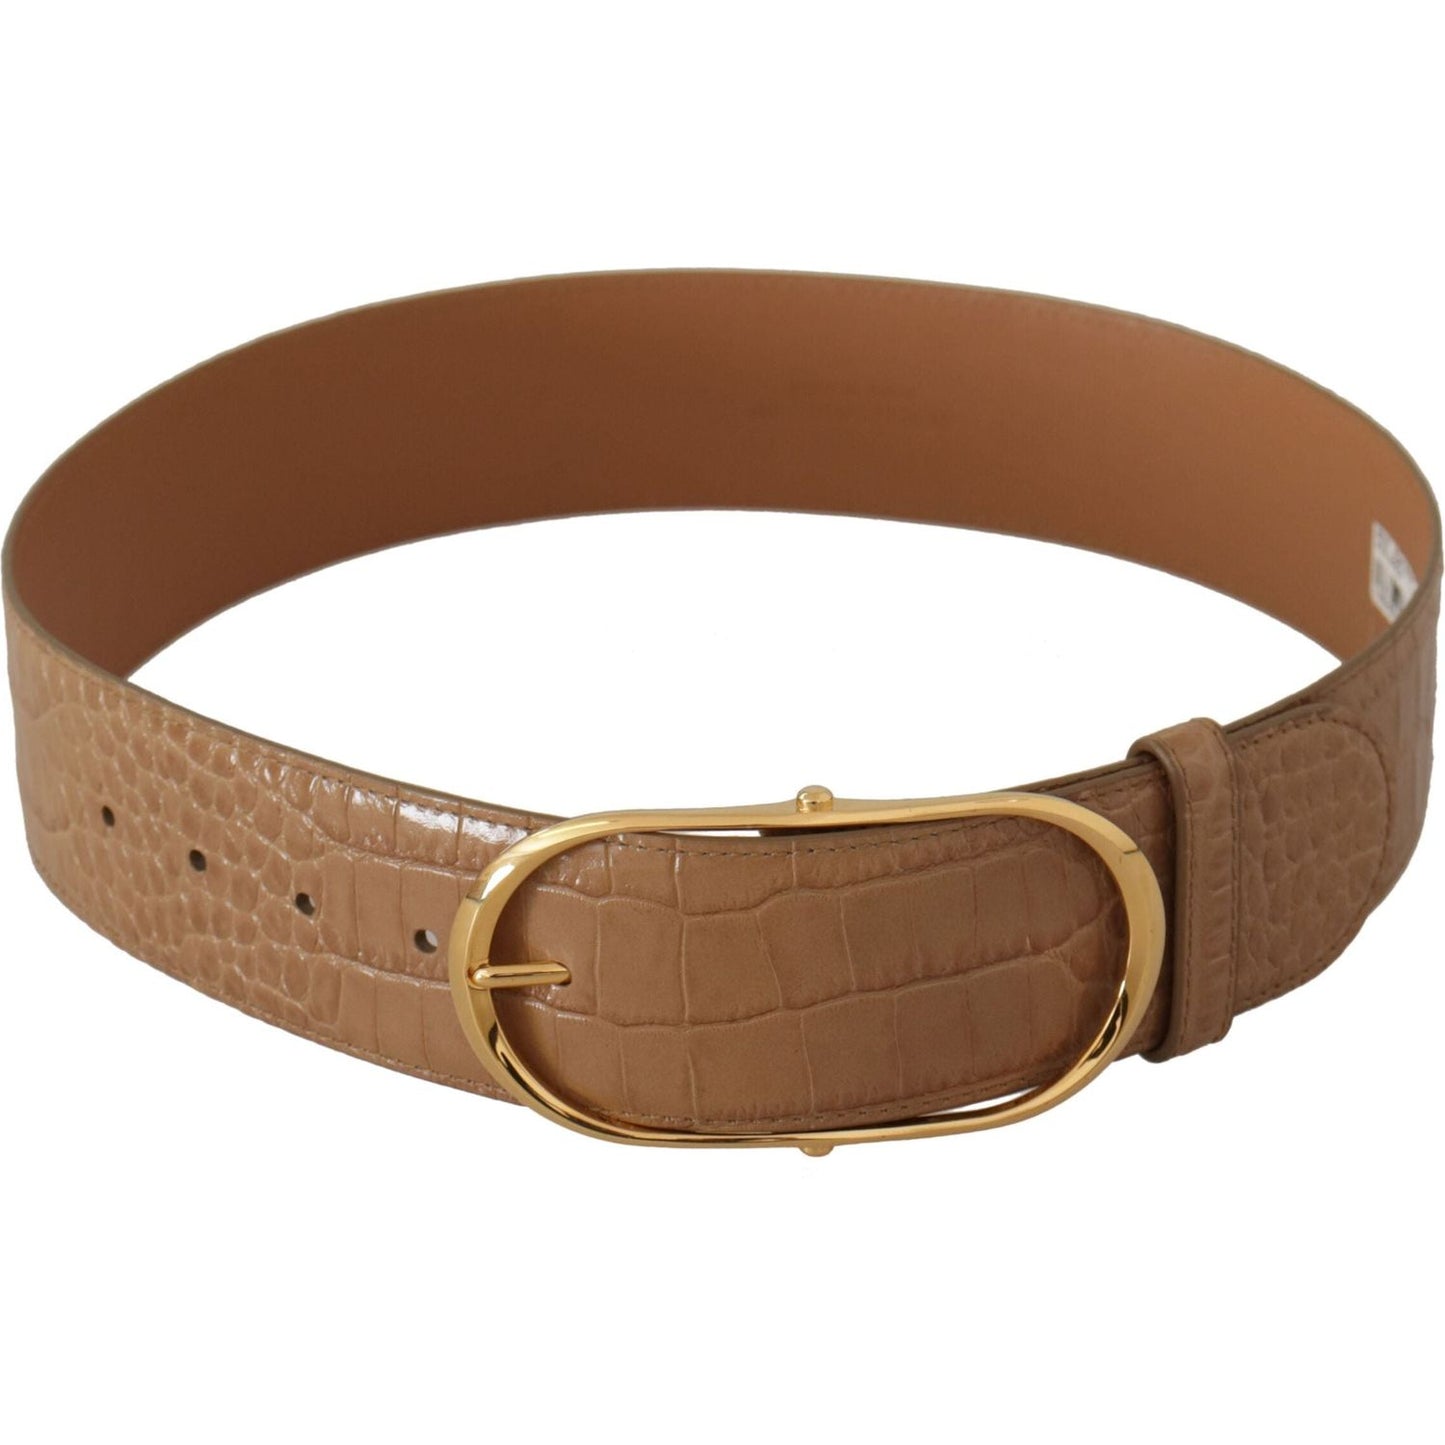 Dolce & Gabbana Elegant Beige Leather Belt with Engraved Buckle brown-beige-leather-gold-metal-oval-buckle-belt IMG_9777-1-scaled-f40e09d2-e26.jpg